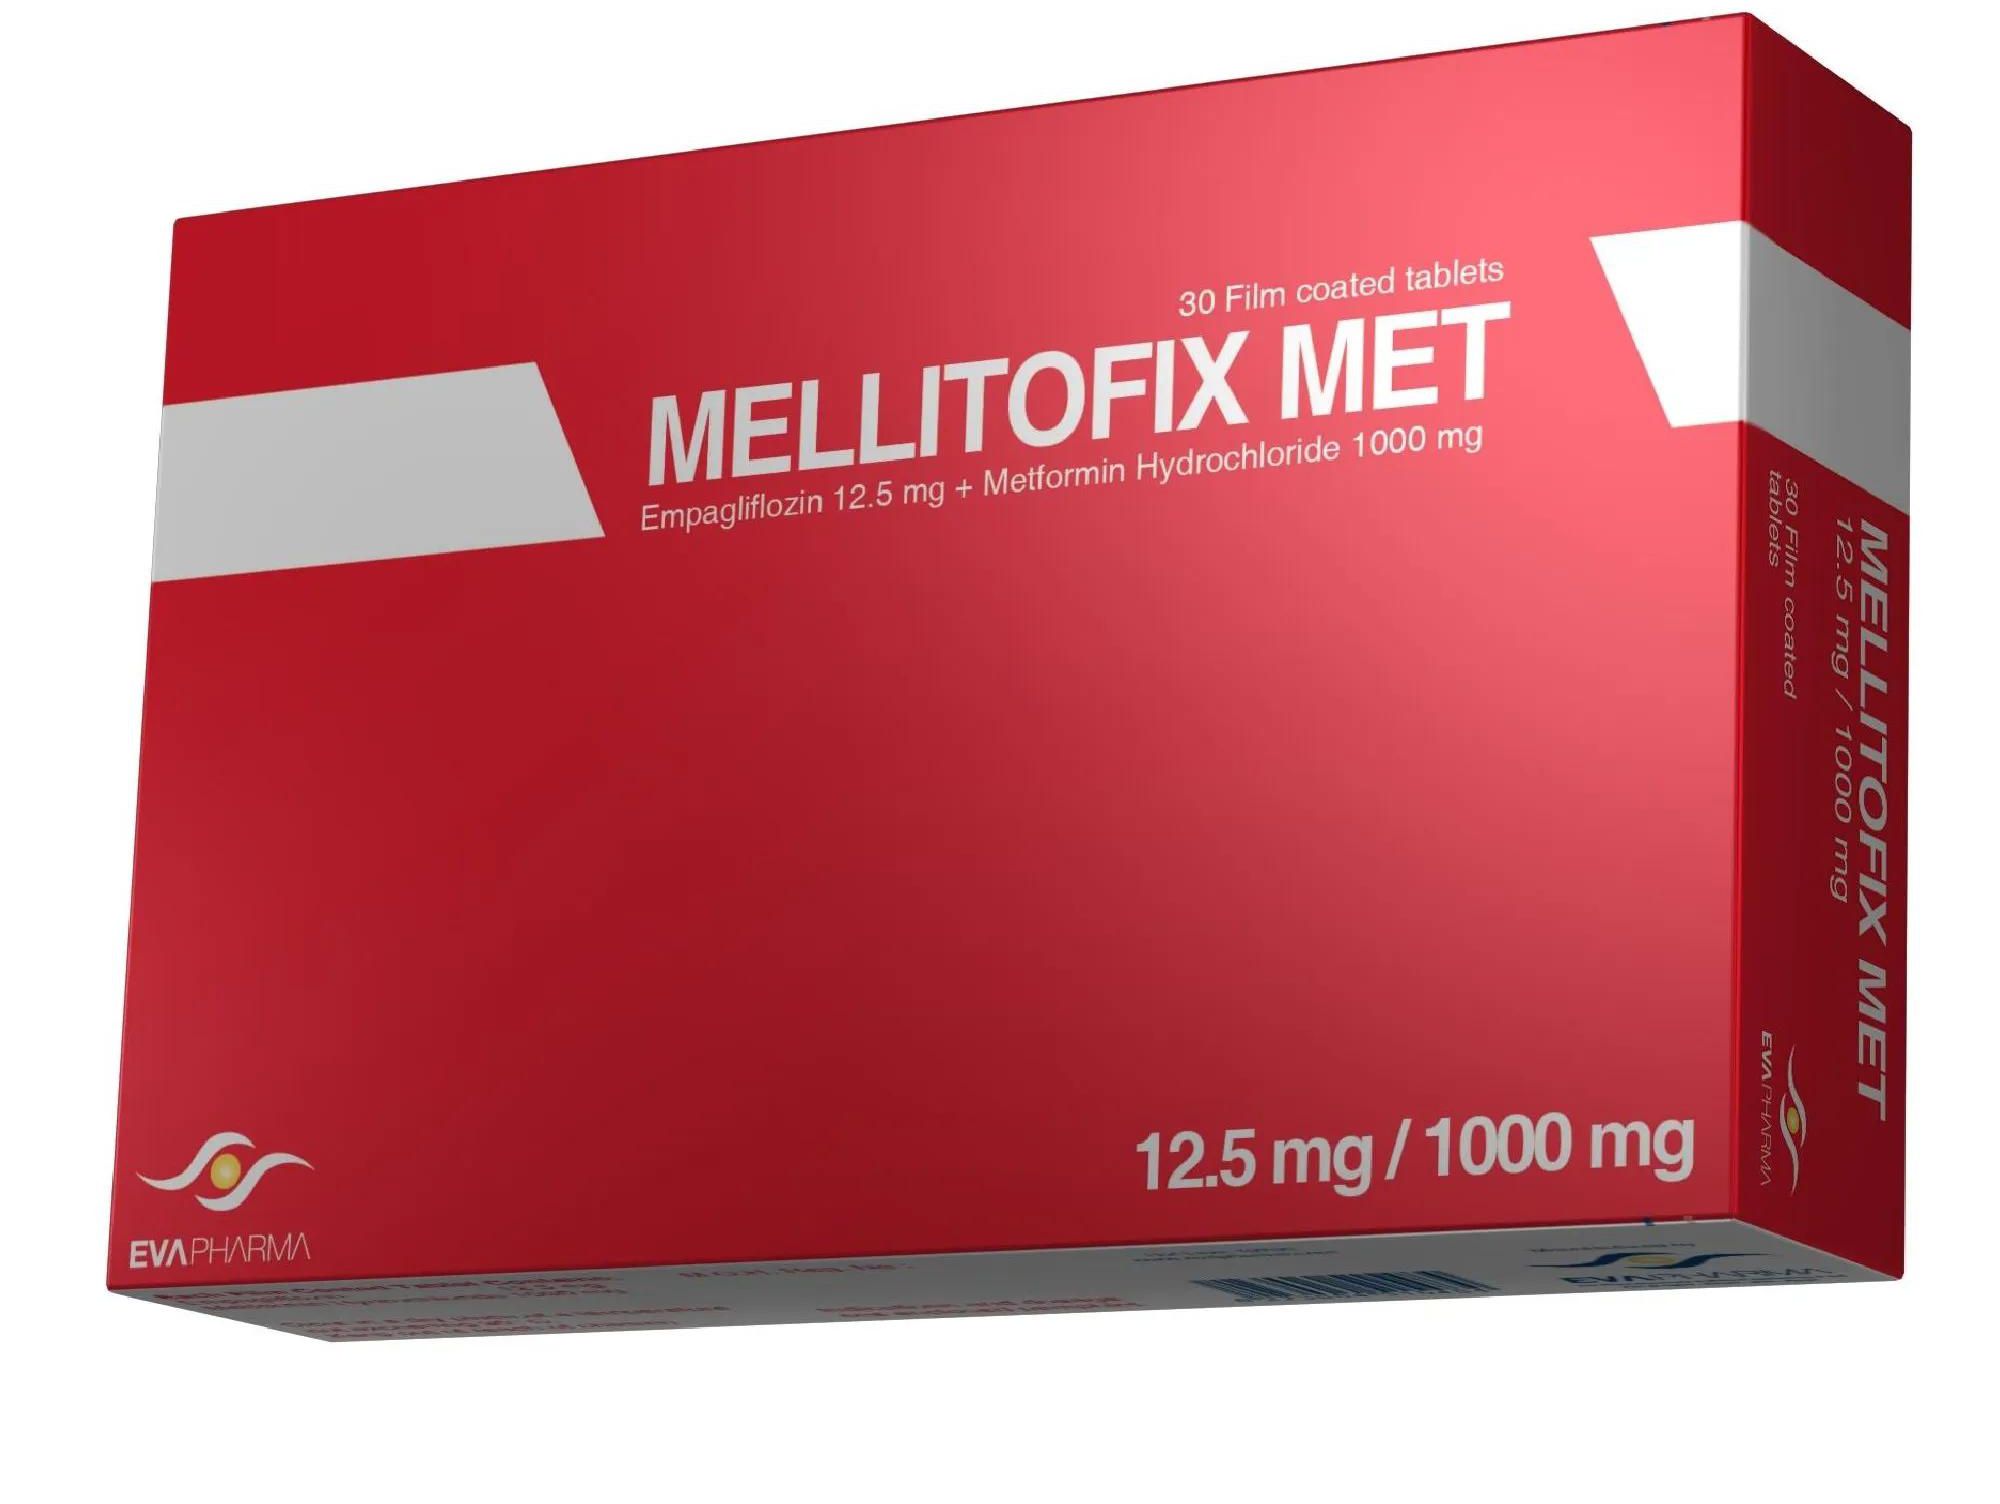 Mellitofix Met | Type 2 Diabetes Treatment | 12.5 mg/1000 mg | 30 Tab